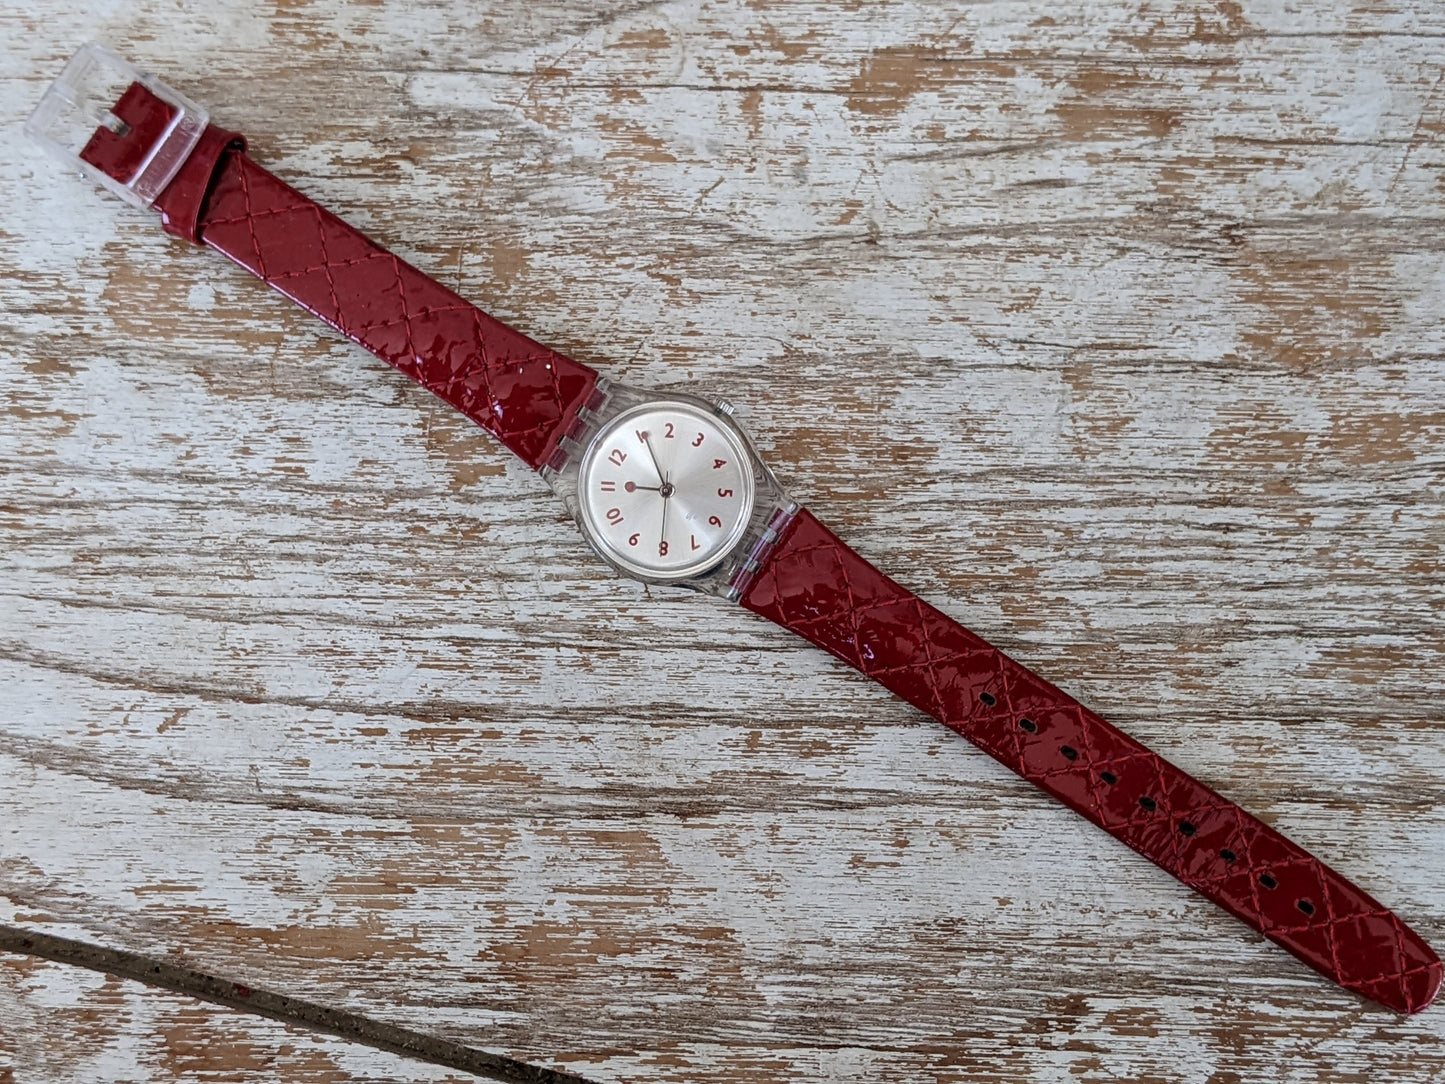 2003 Swatch "Strawberry Jam" LK243 Slim Ladies Wrist Watch **Red Quilted Leather